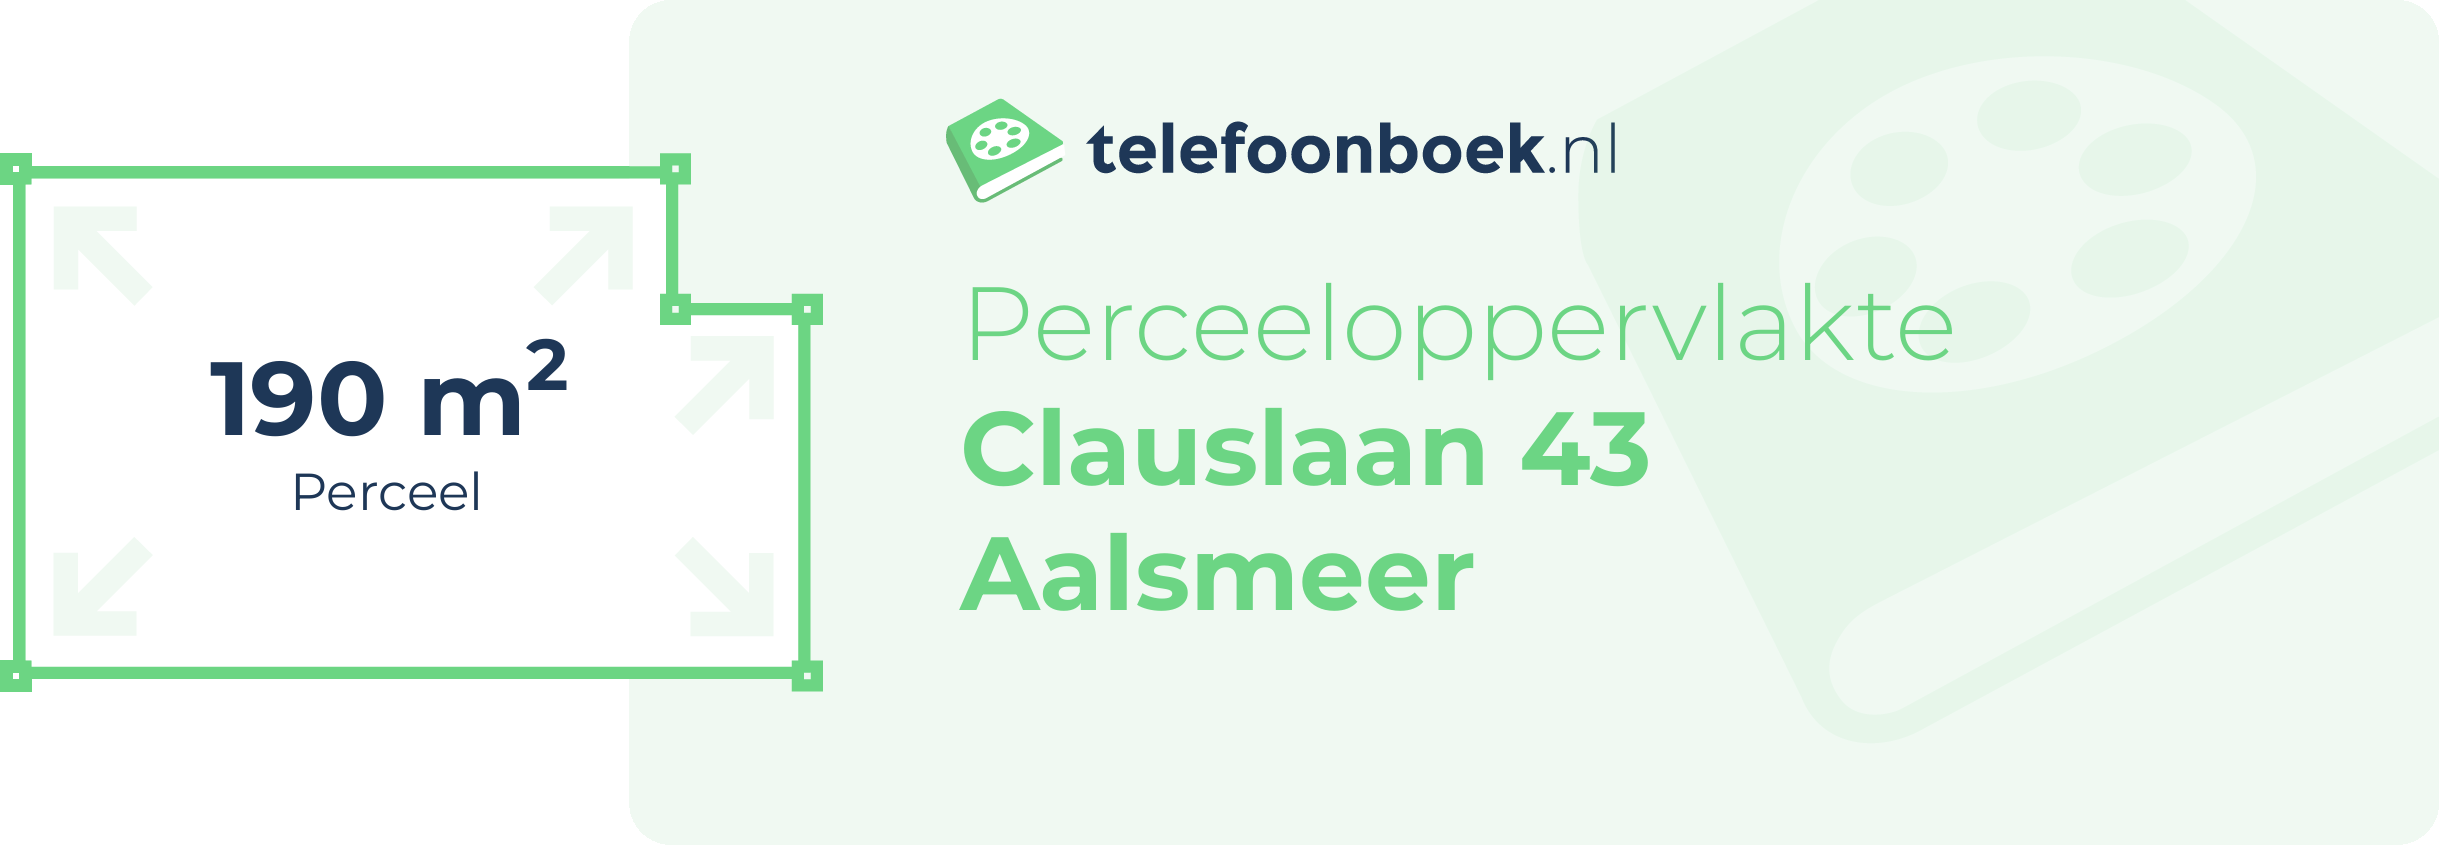 Perceeloppervlakte Clauslaan 43 Aalsmeer